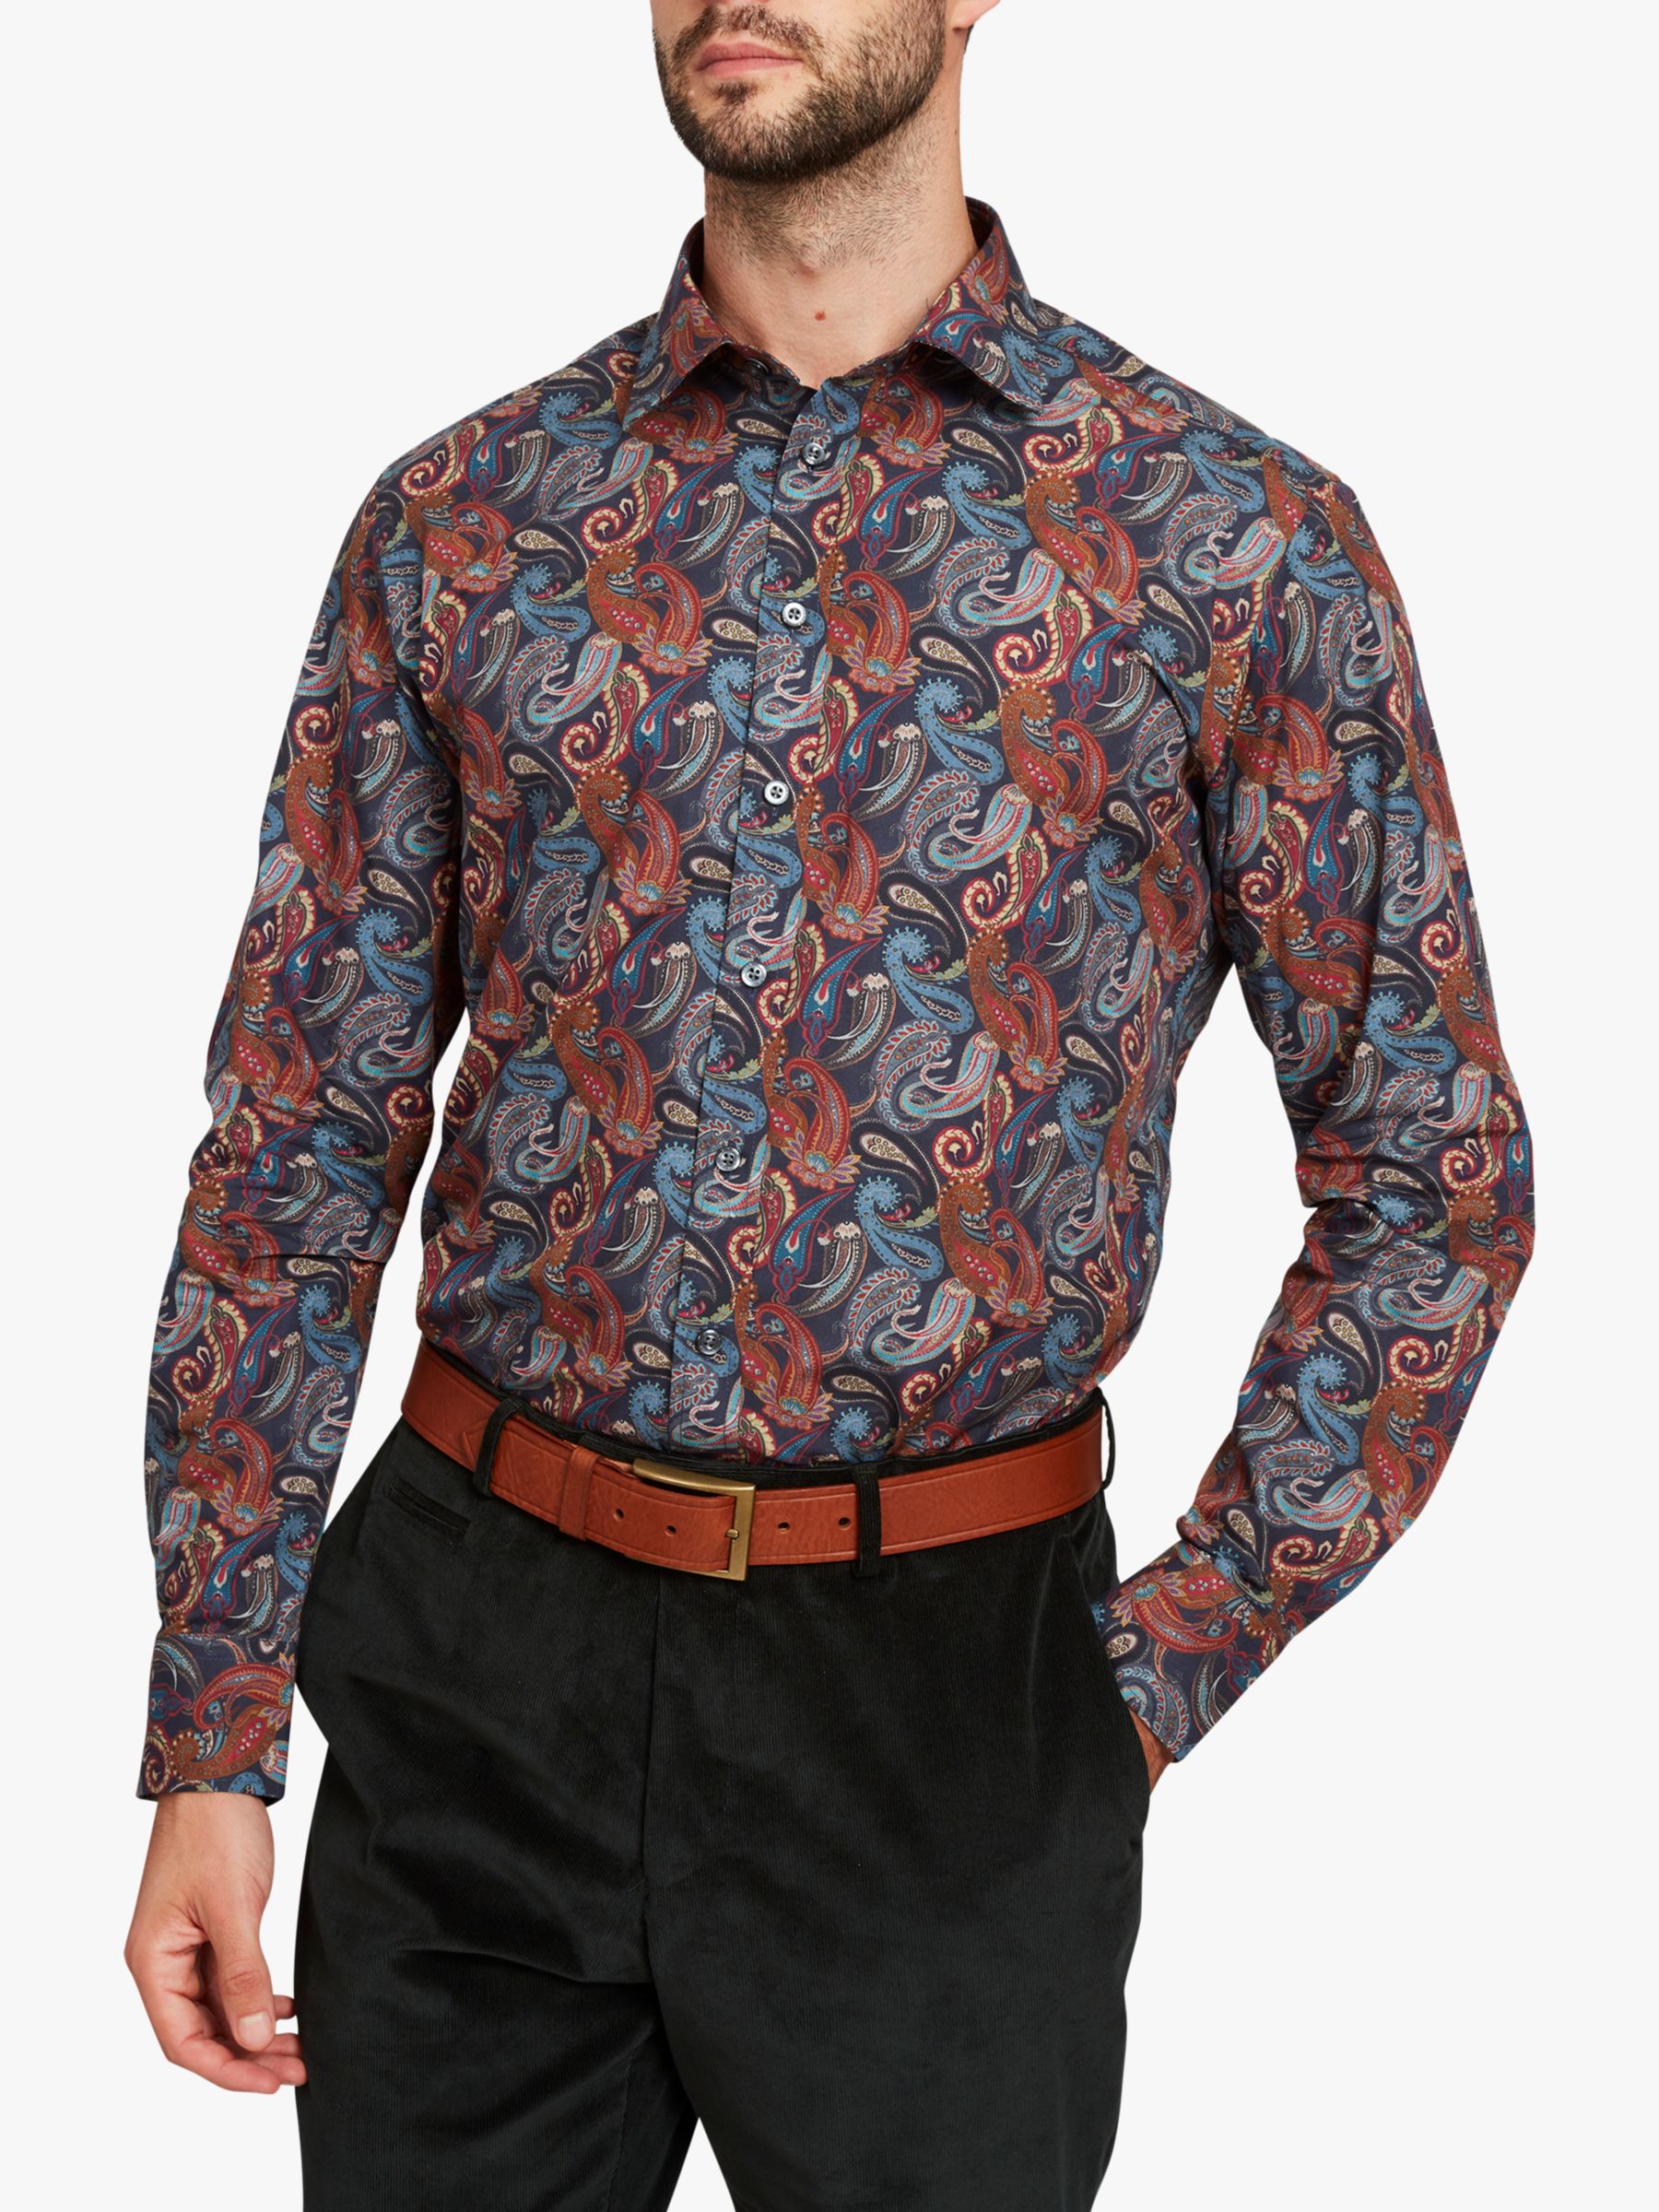 Ночная рубашка Simon Carter с узором пейсли, темно-синий мульти широкий комбинезон с узором пейсли accessorize синий мульти